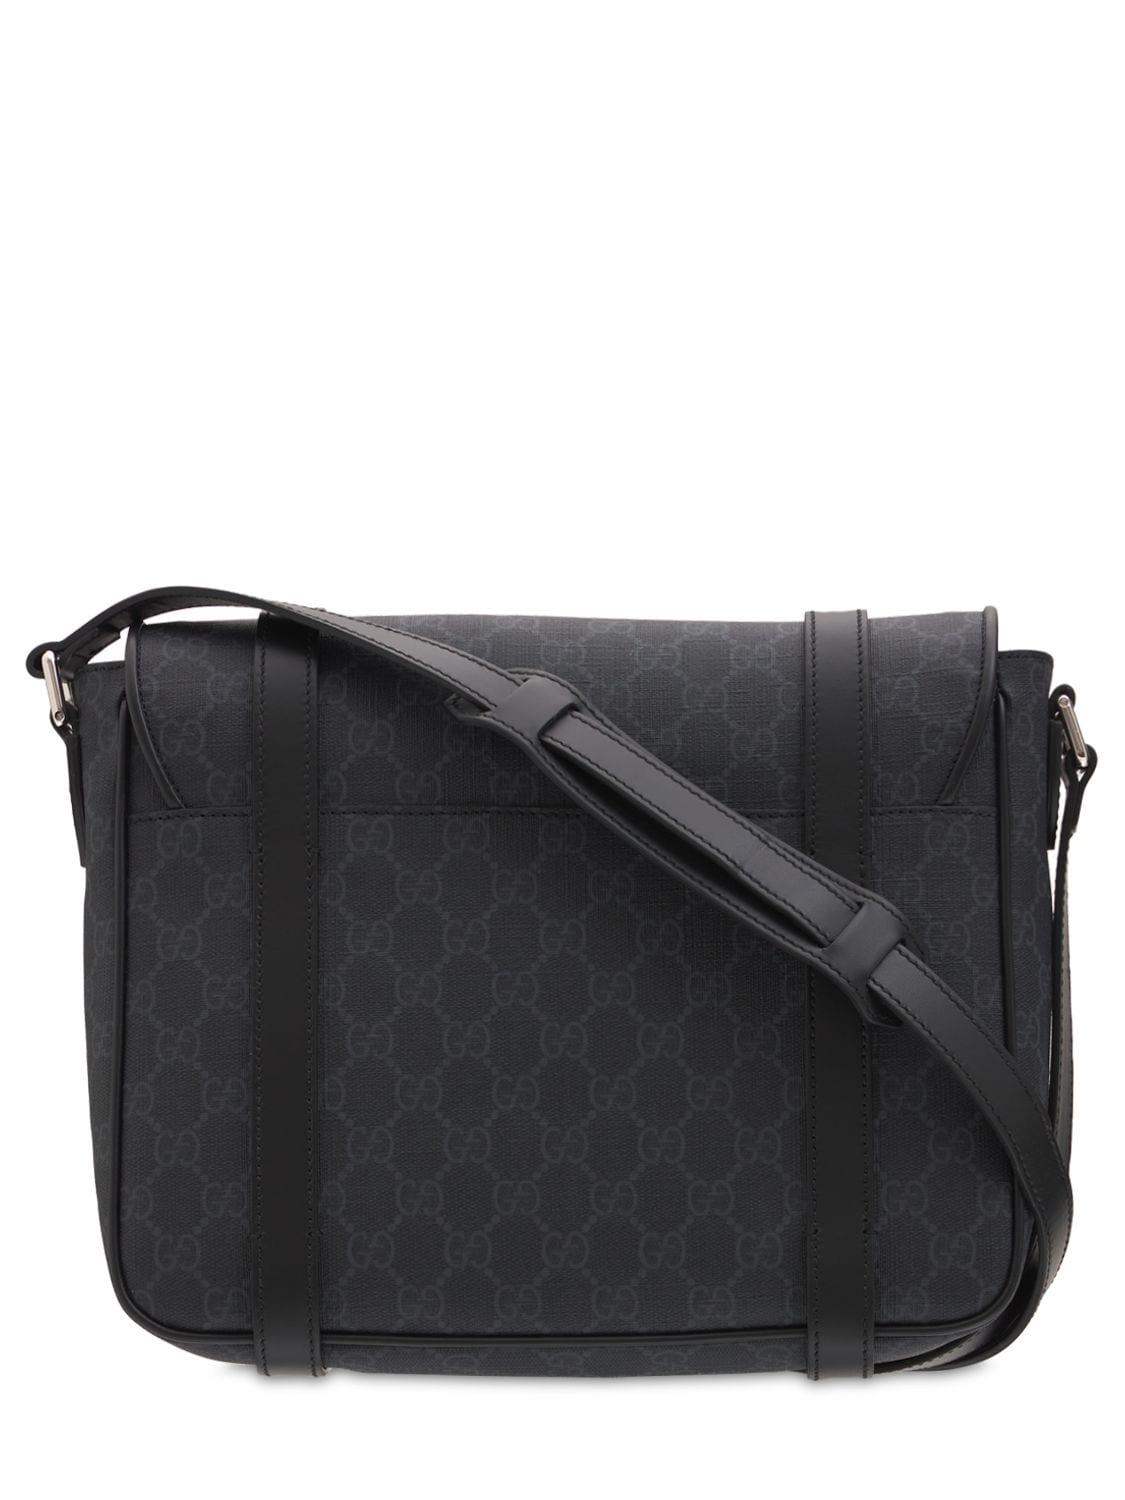 Gucci GG Canvas Messenger Bag in Nero/Nero (Black) for Men - Save 23% | Lyst